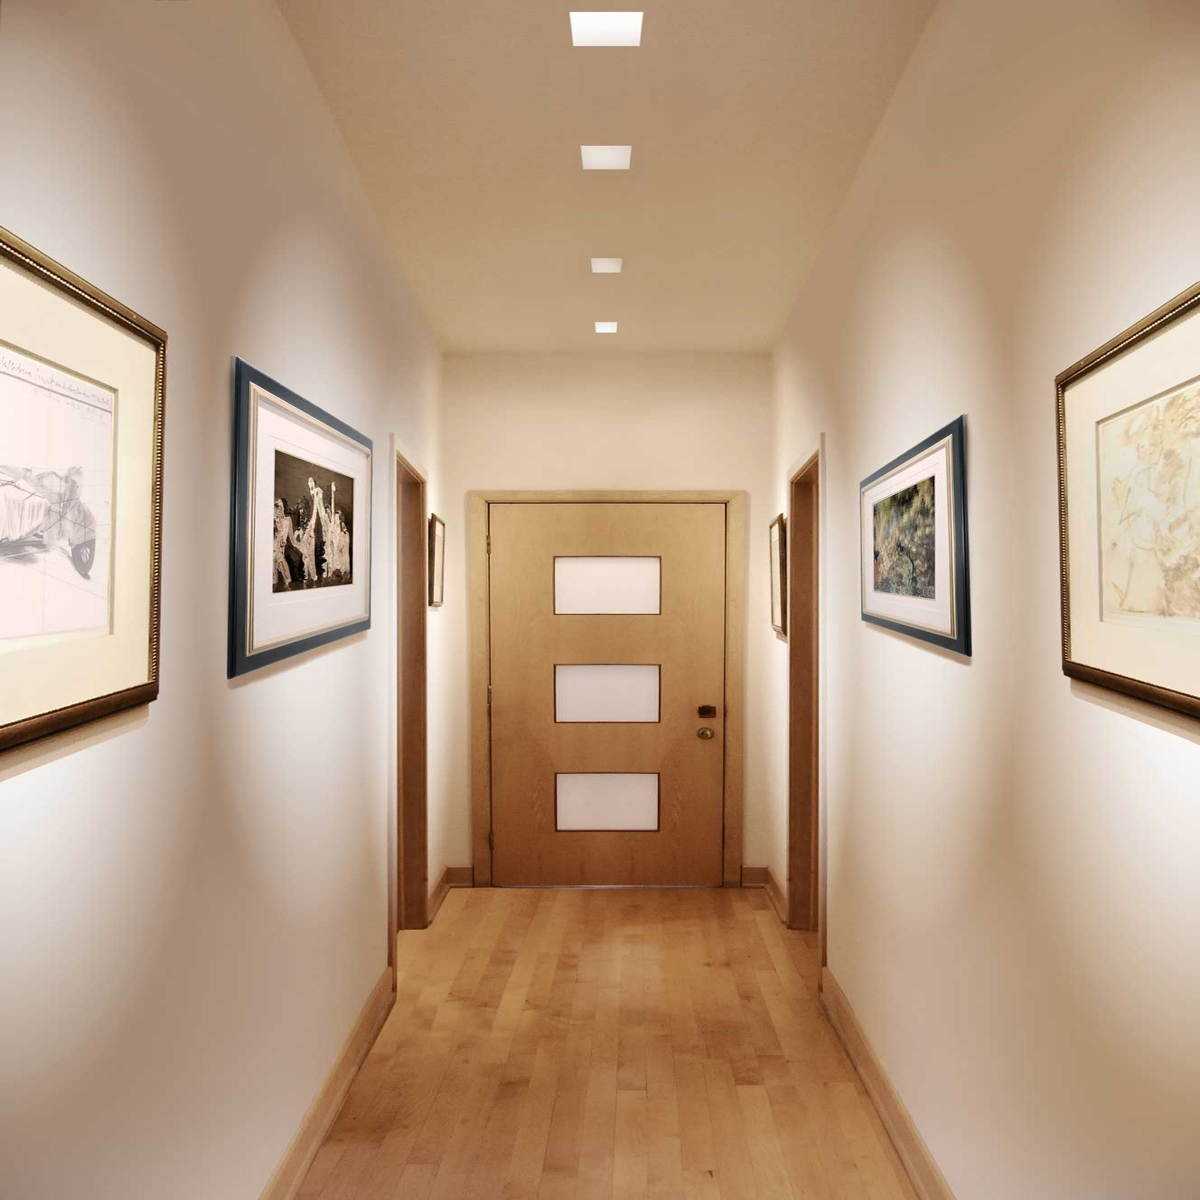 6 советов по организации освещения в коридоре квартиры и дома + фото